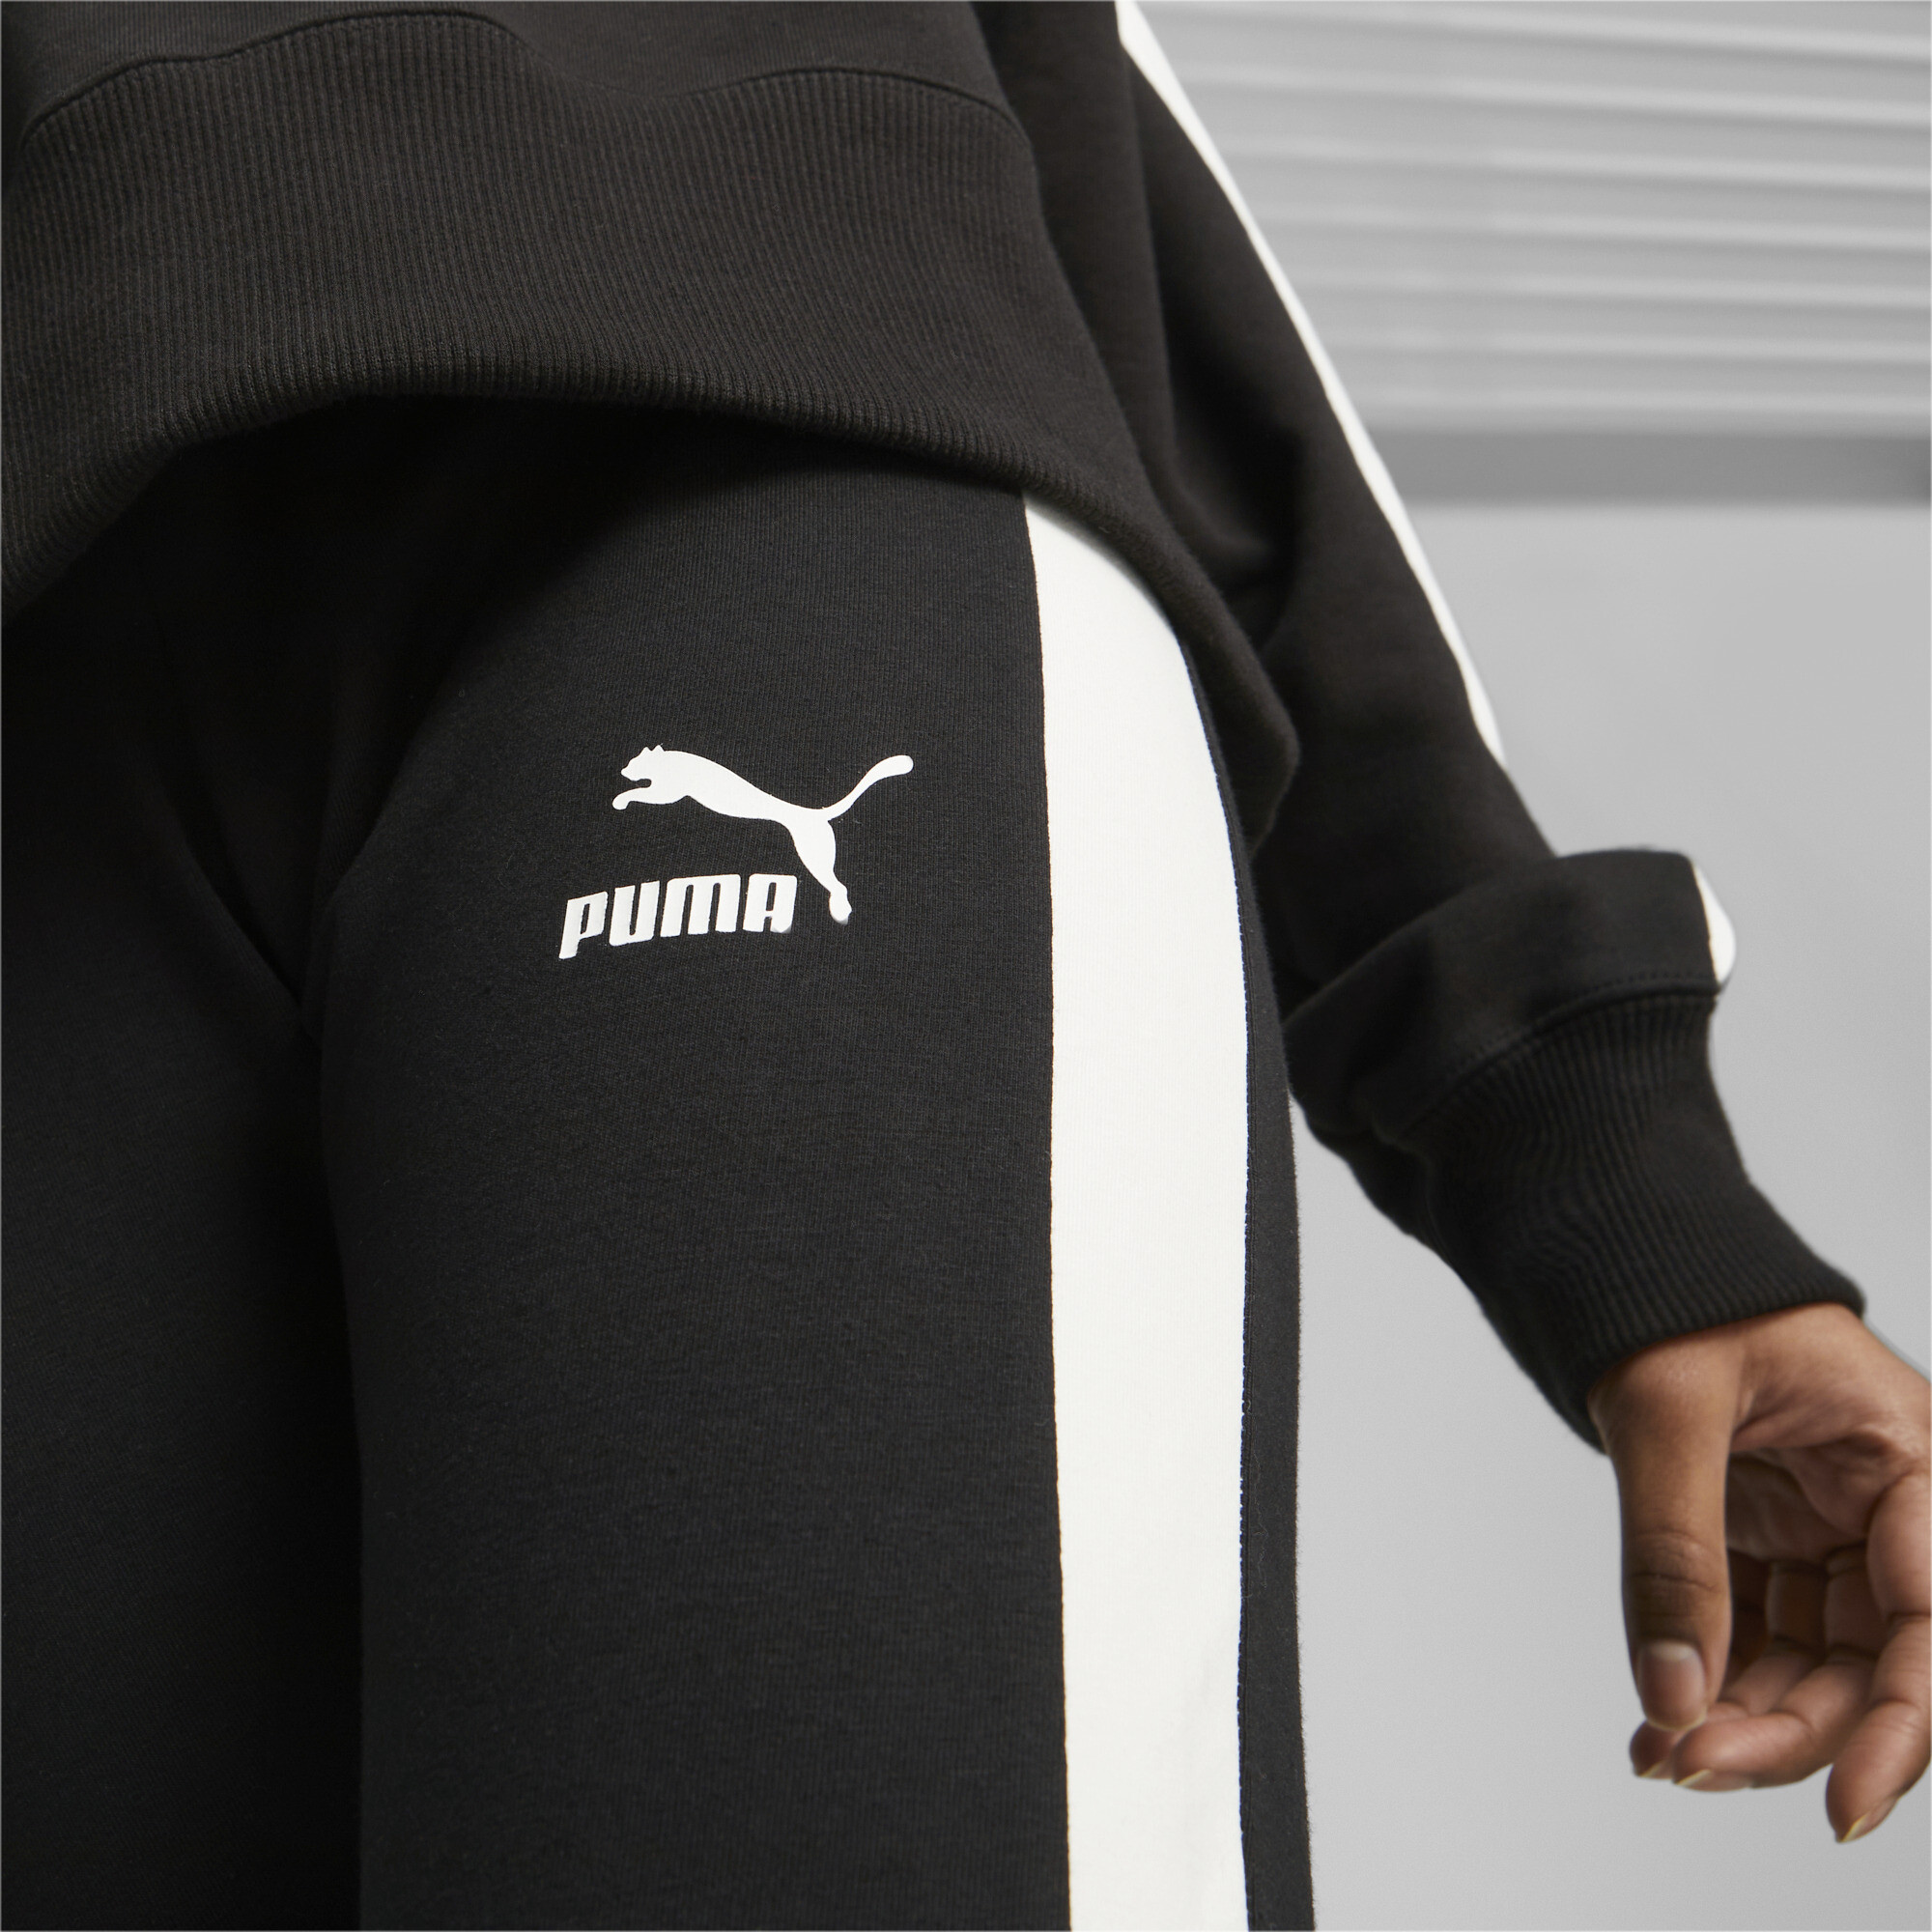 Women's PUMA Iconic T7 Mid-Rise Leggings In Black, Size XS